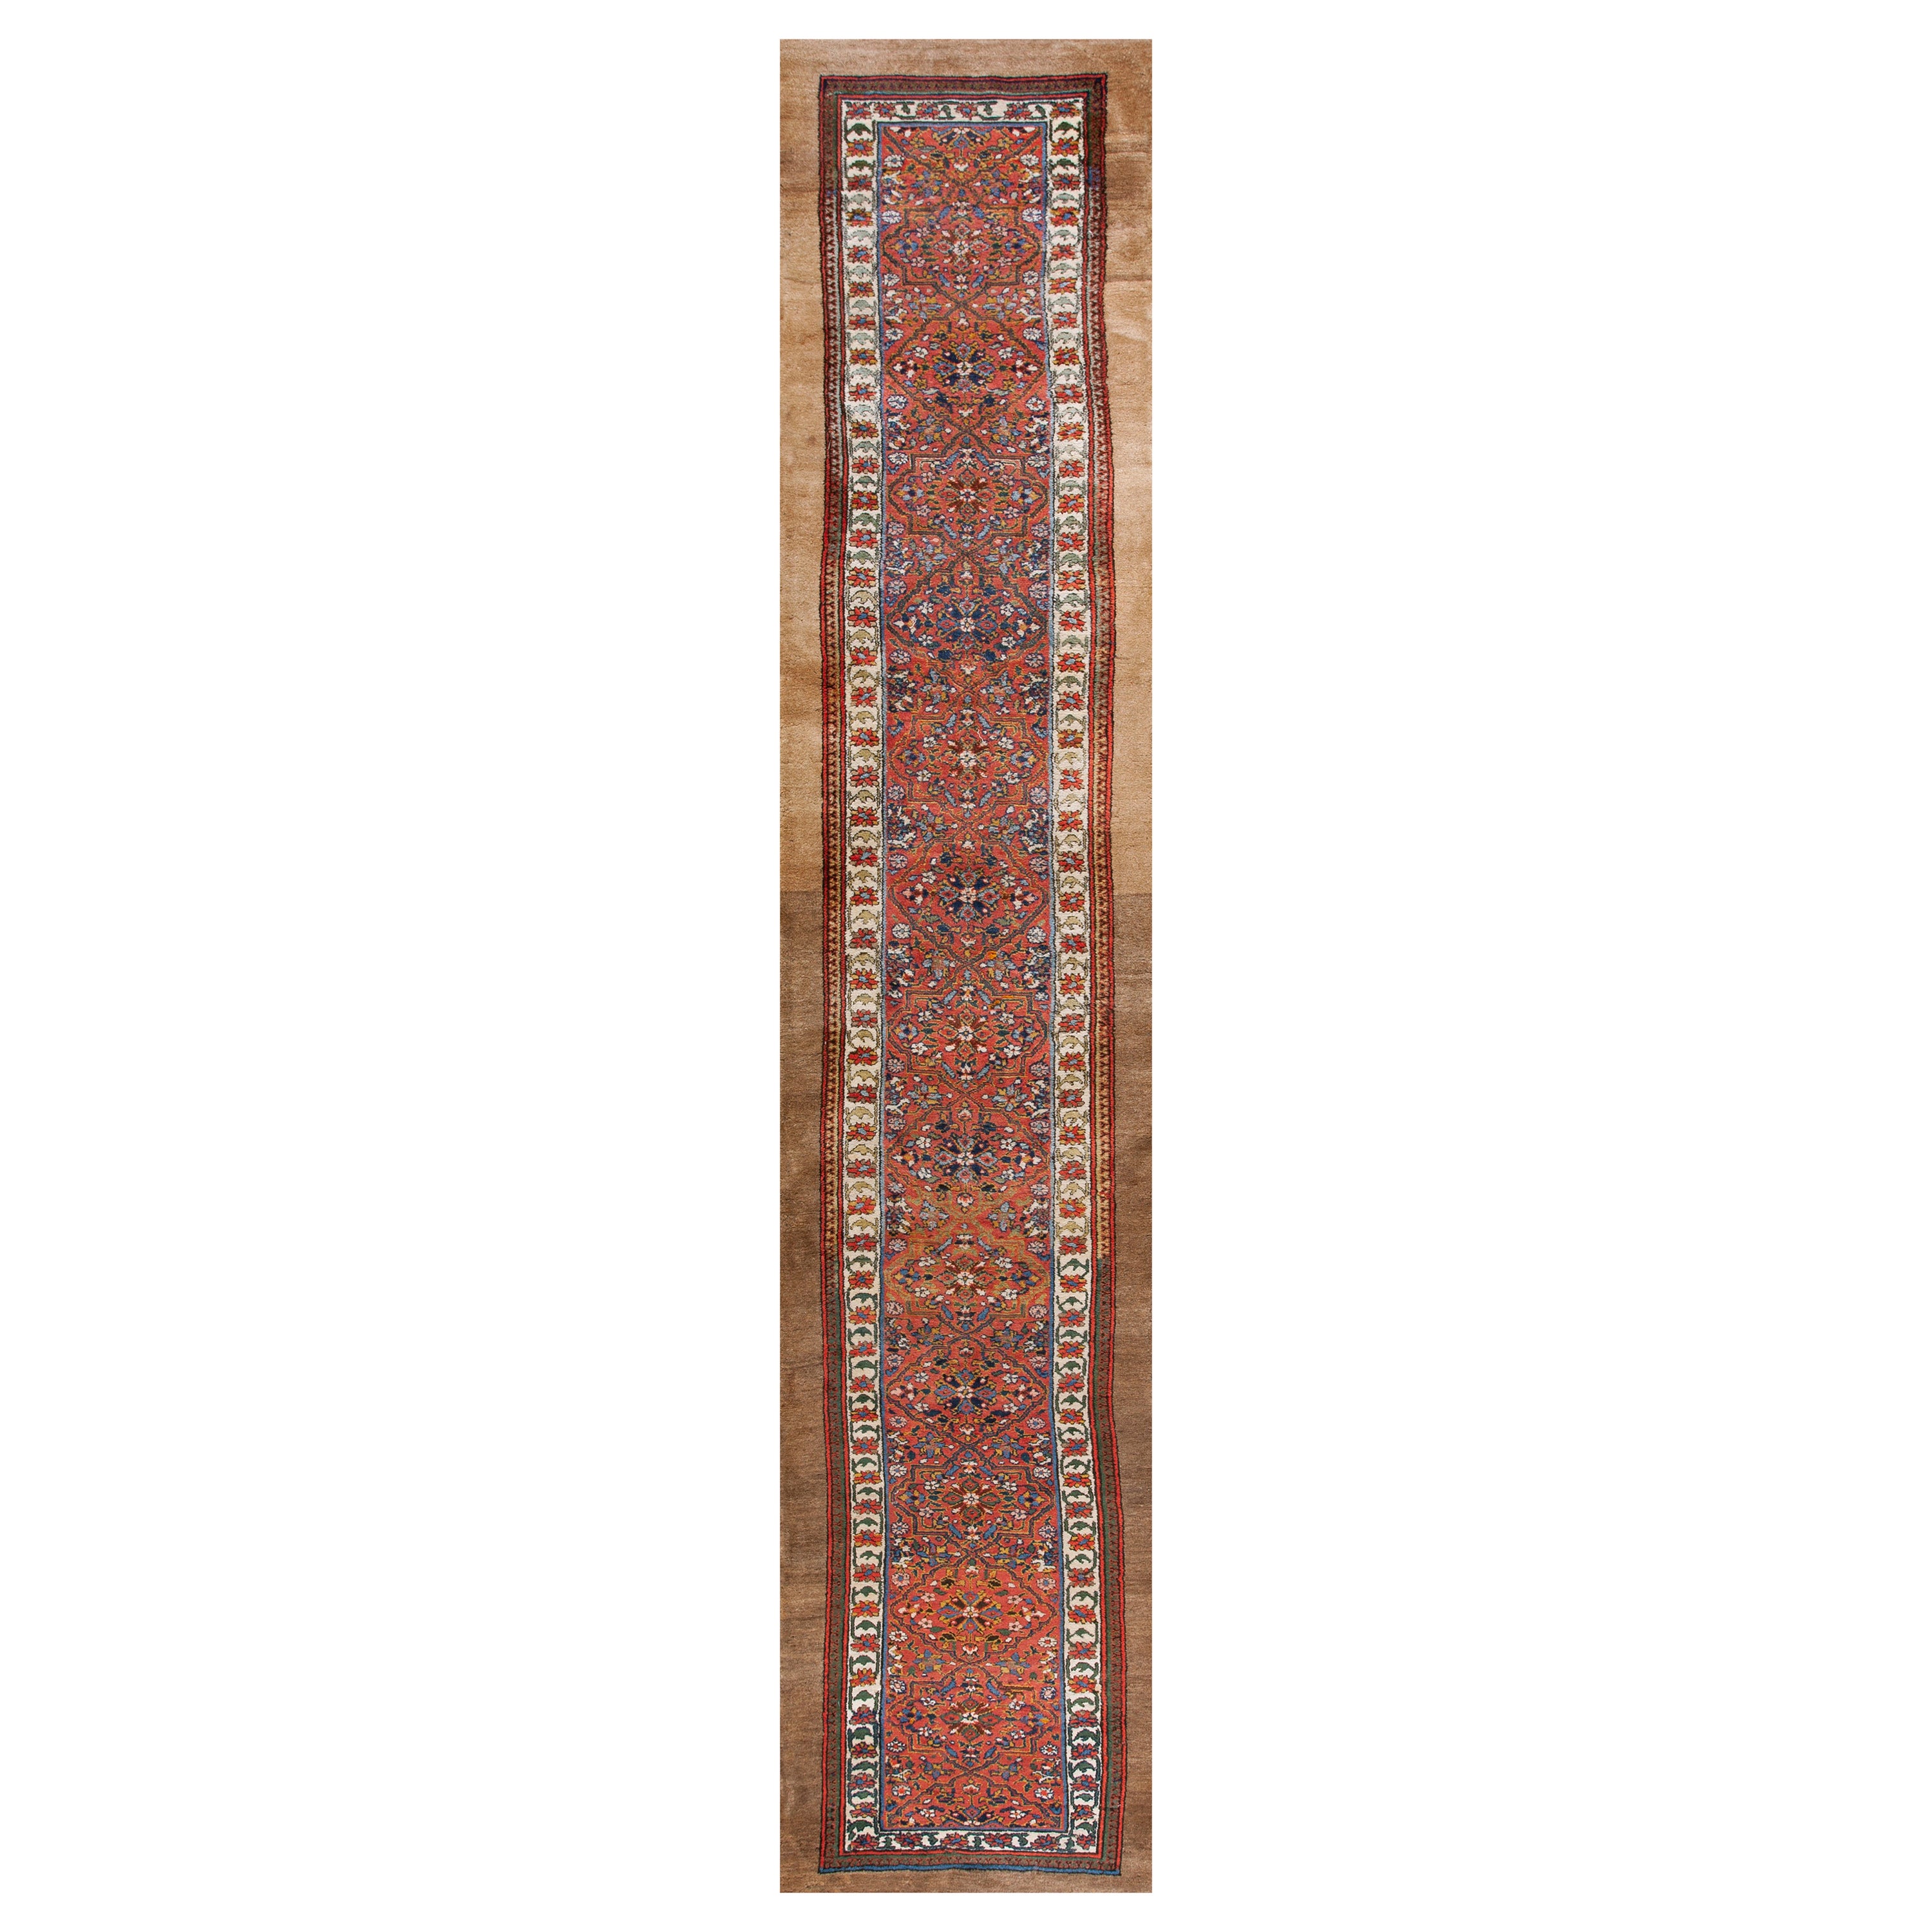 19th Century Persian Serab Runner Carpet ( 3'2" x 15'6" - 97 x 472 )